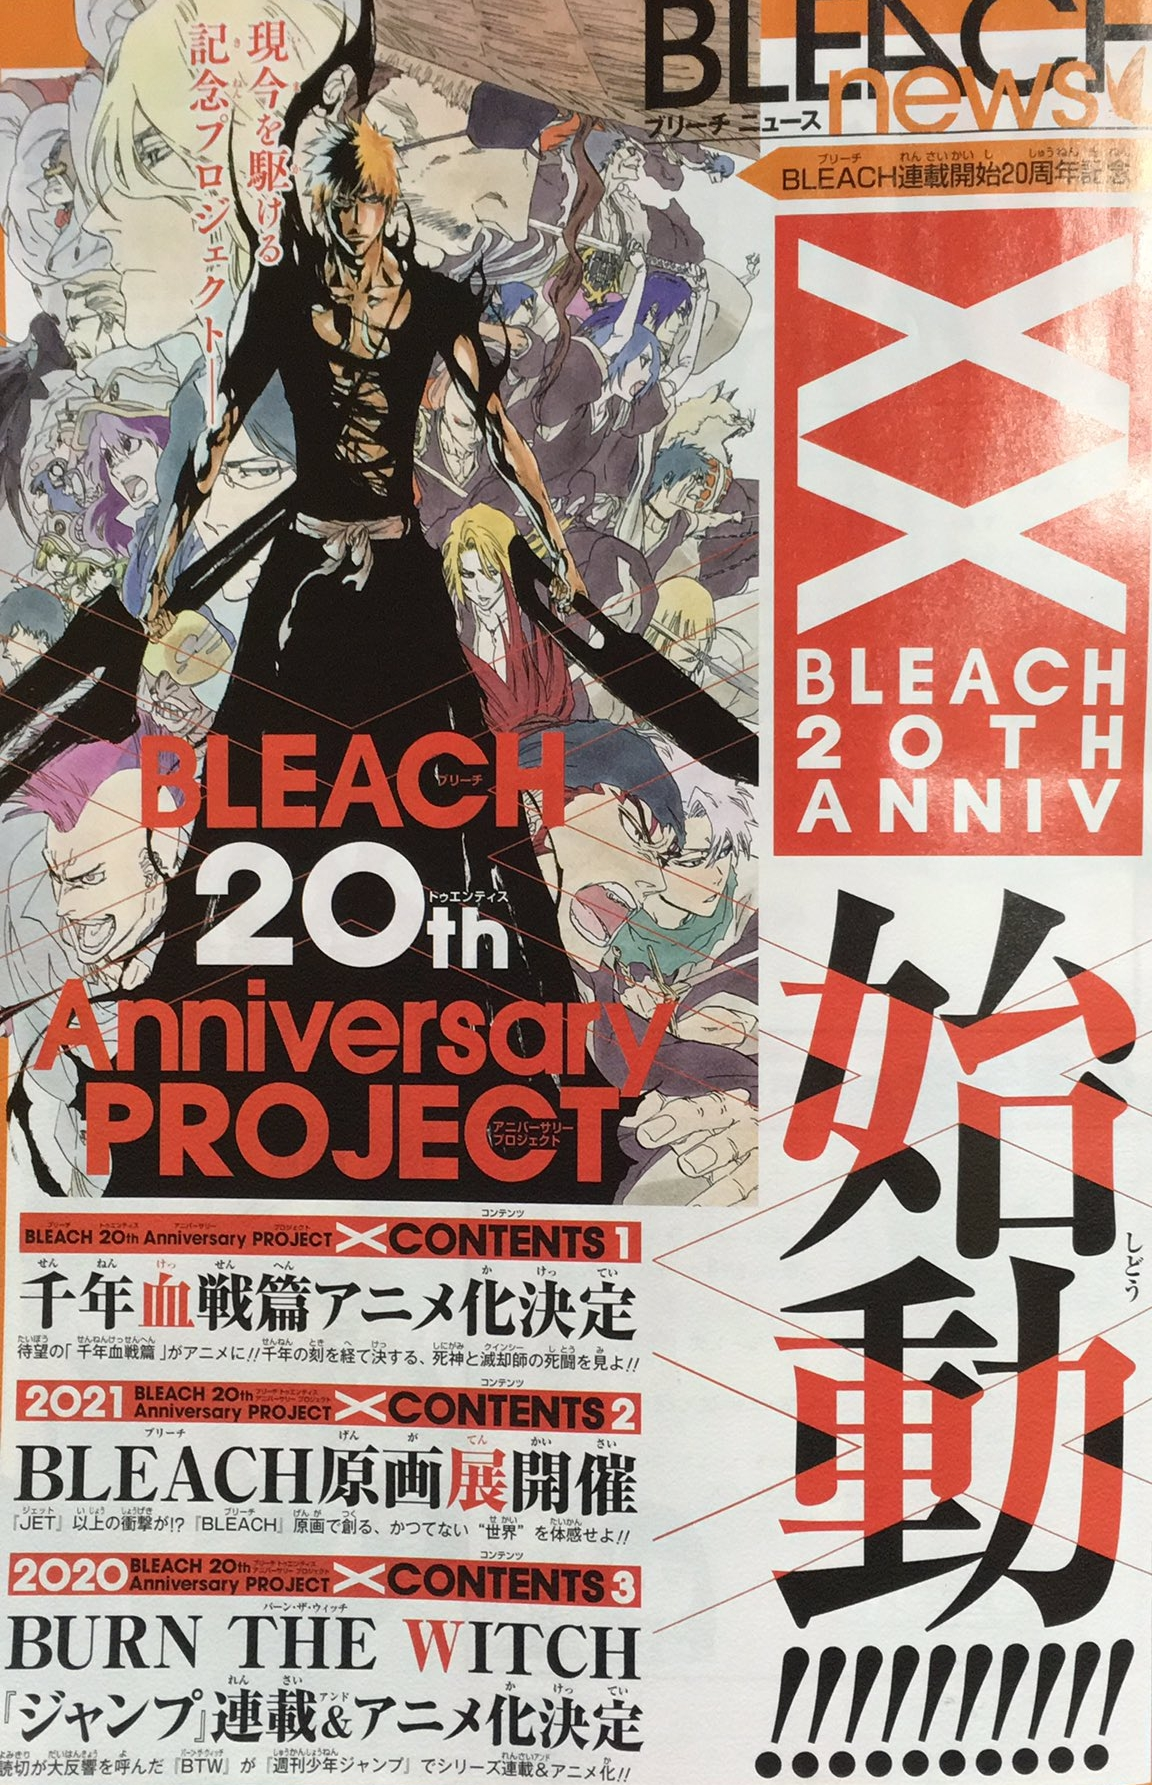 Bleach Anime Returns to Adapt Thousand-Year Blood War Arc